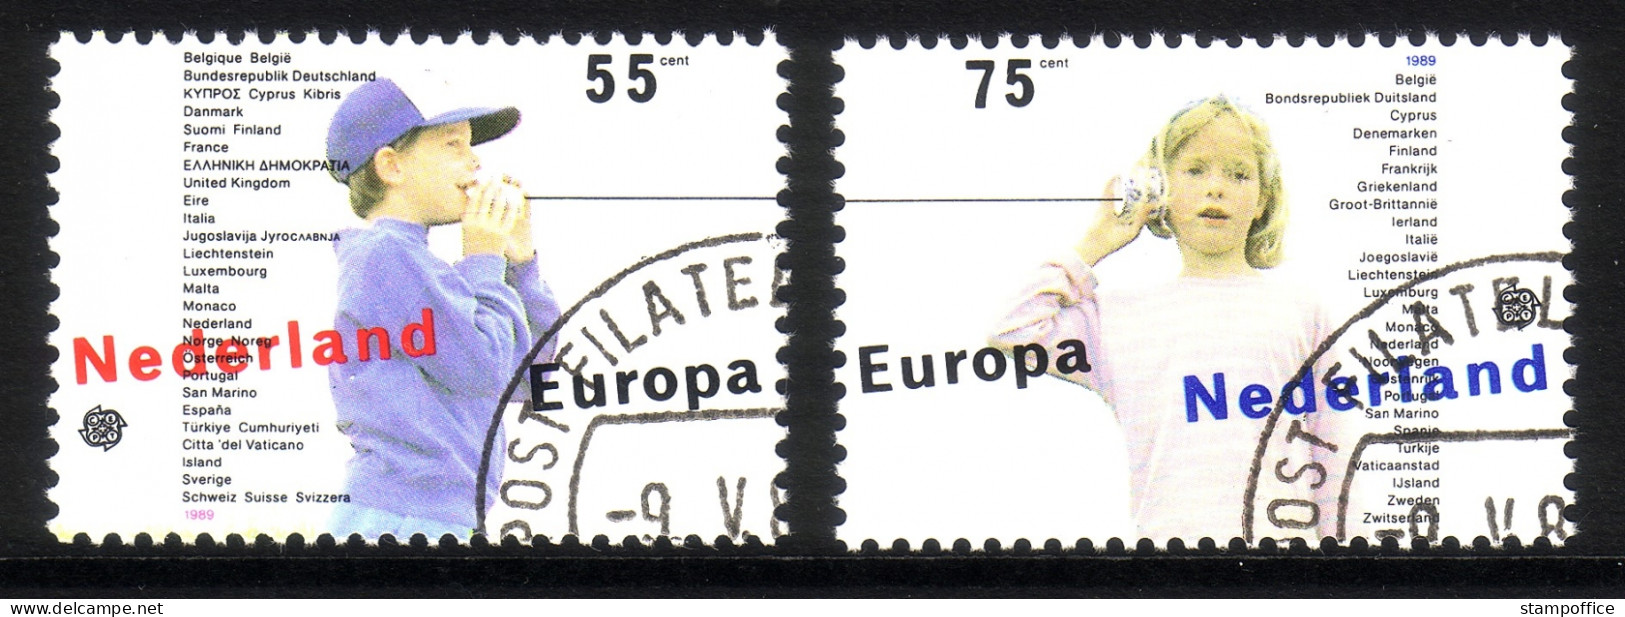 NIEDERLANDE MI-NR. 1364-1365 O EUROPA 1989 - KINDERSPIELE - 1989